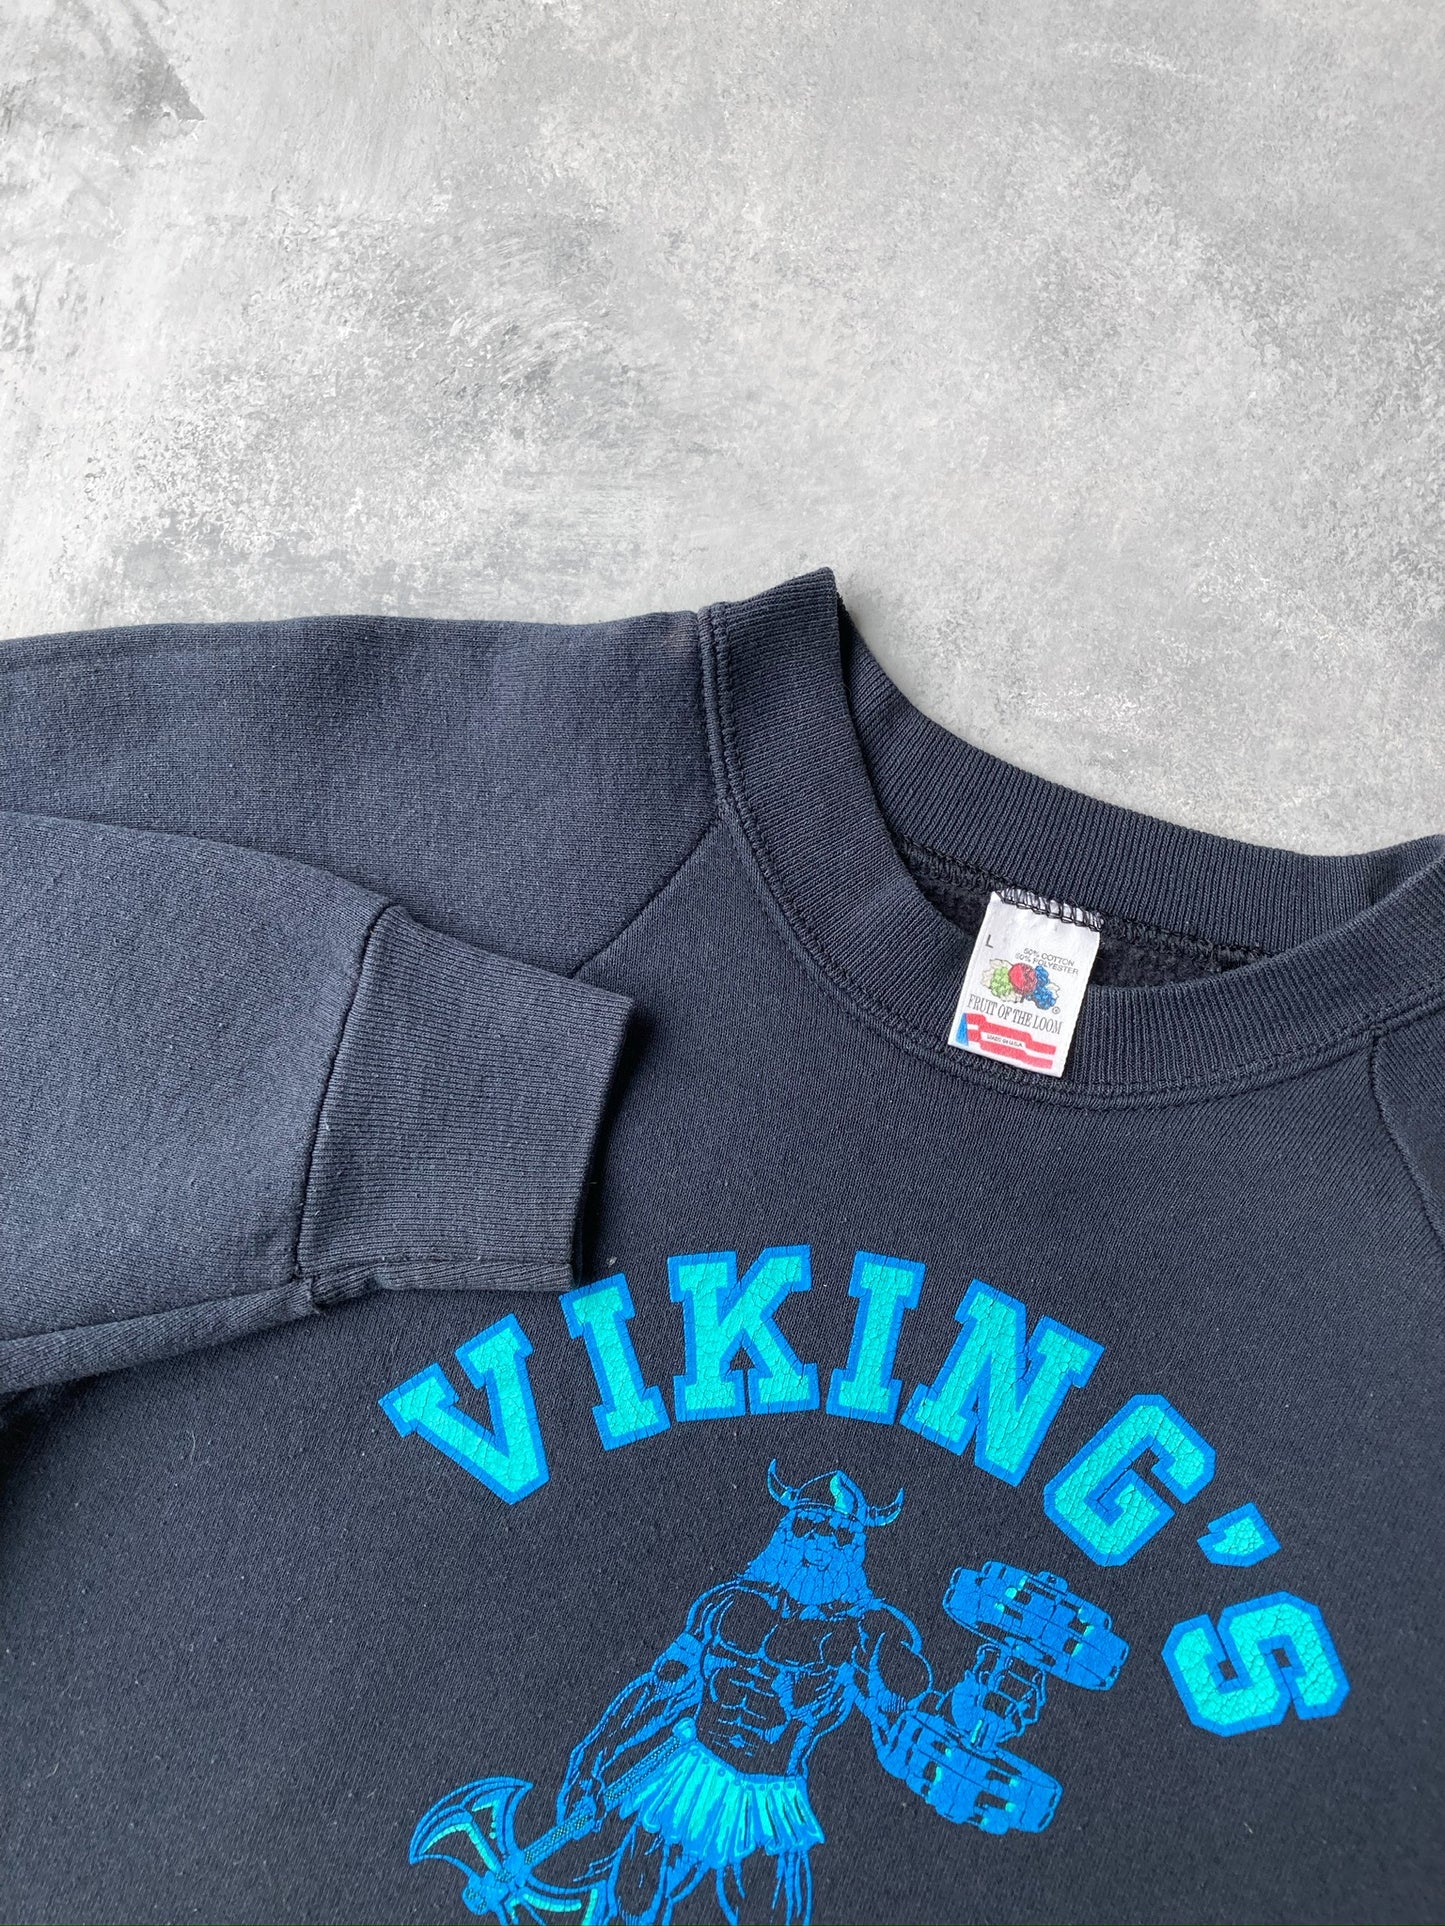 Viking's Gym Sweatshirt 80's - Medium